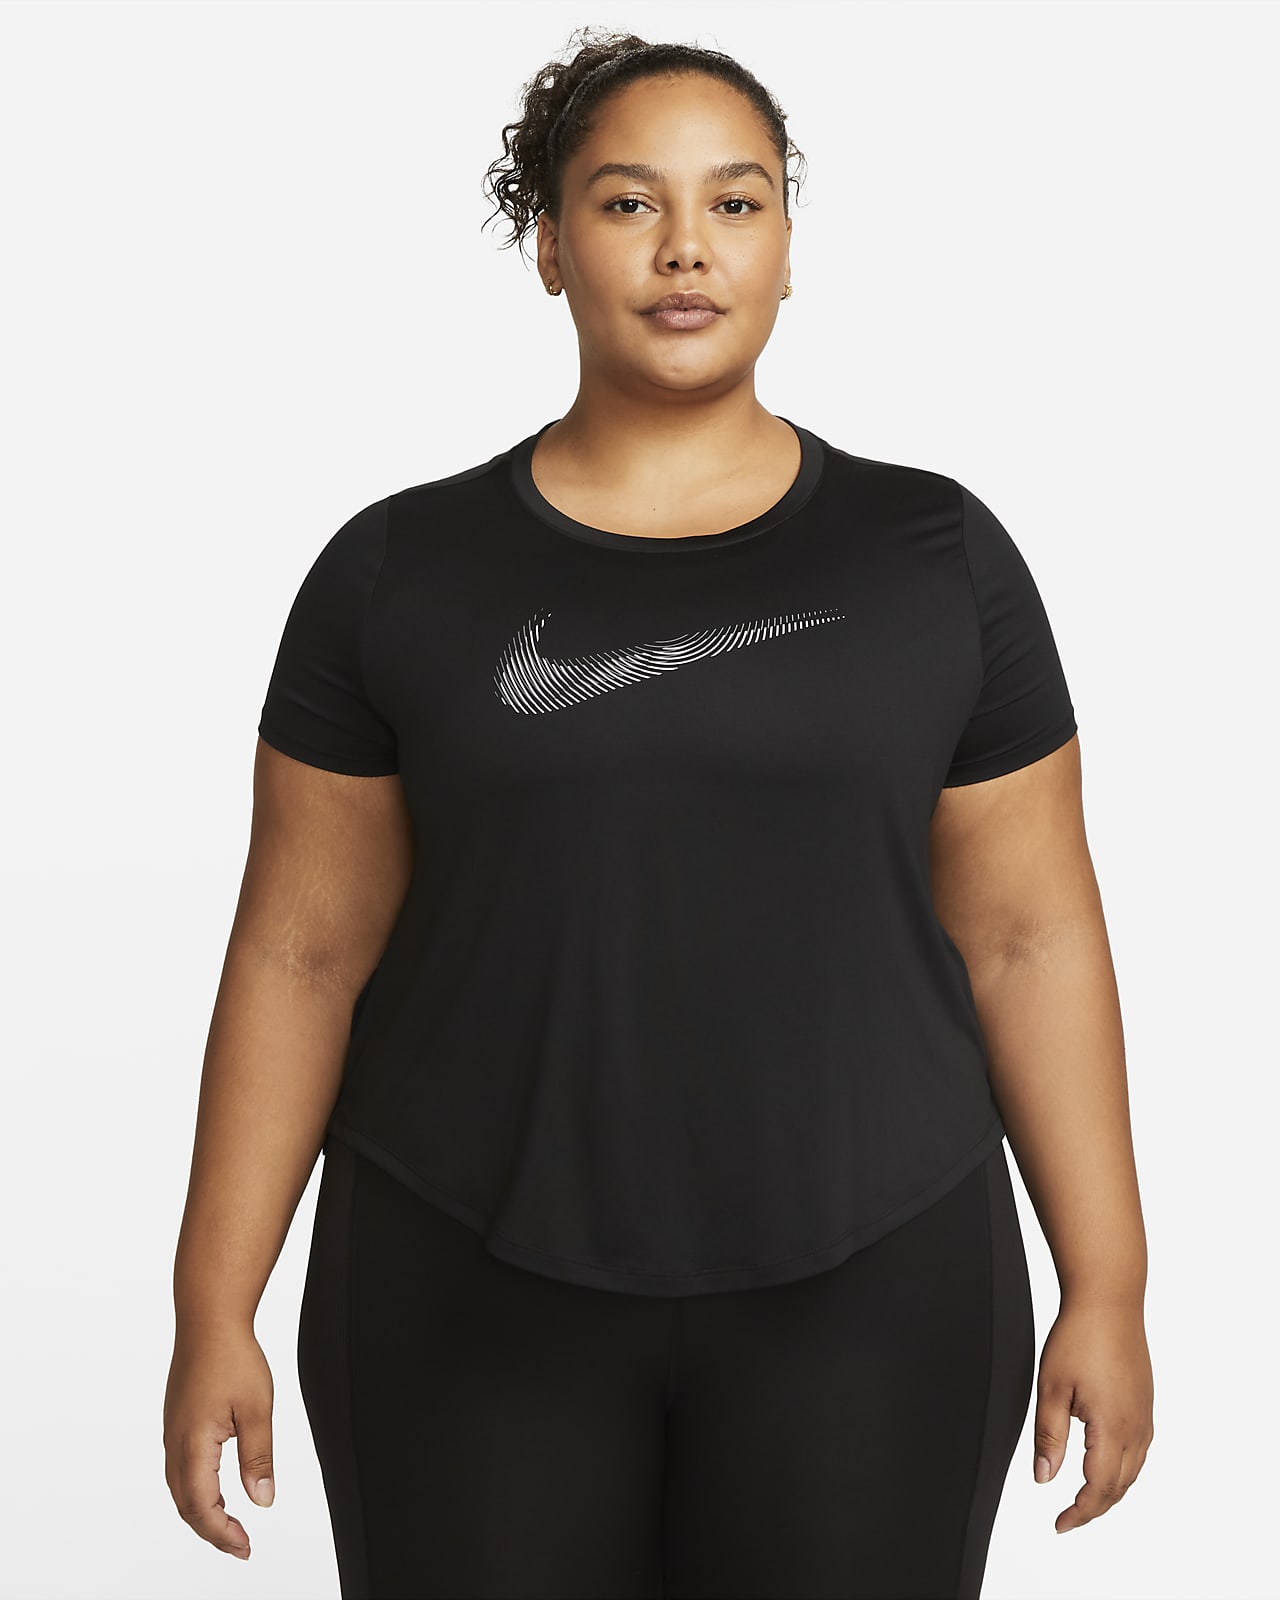 Nike Dri-Fit Black Running Shorts Size Large